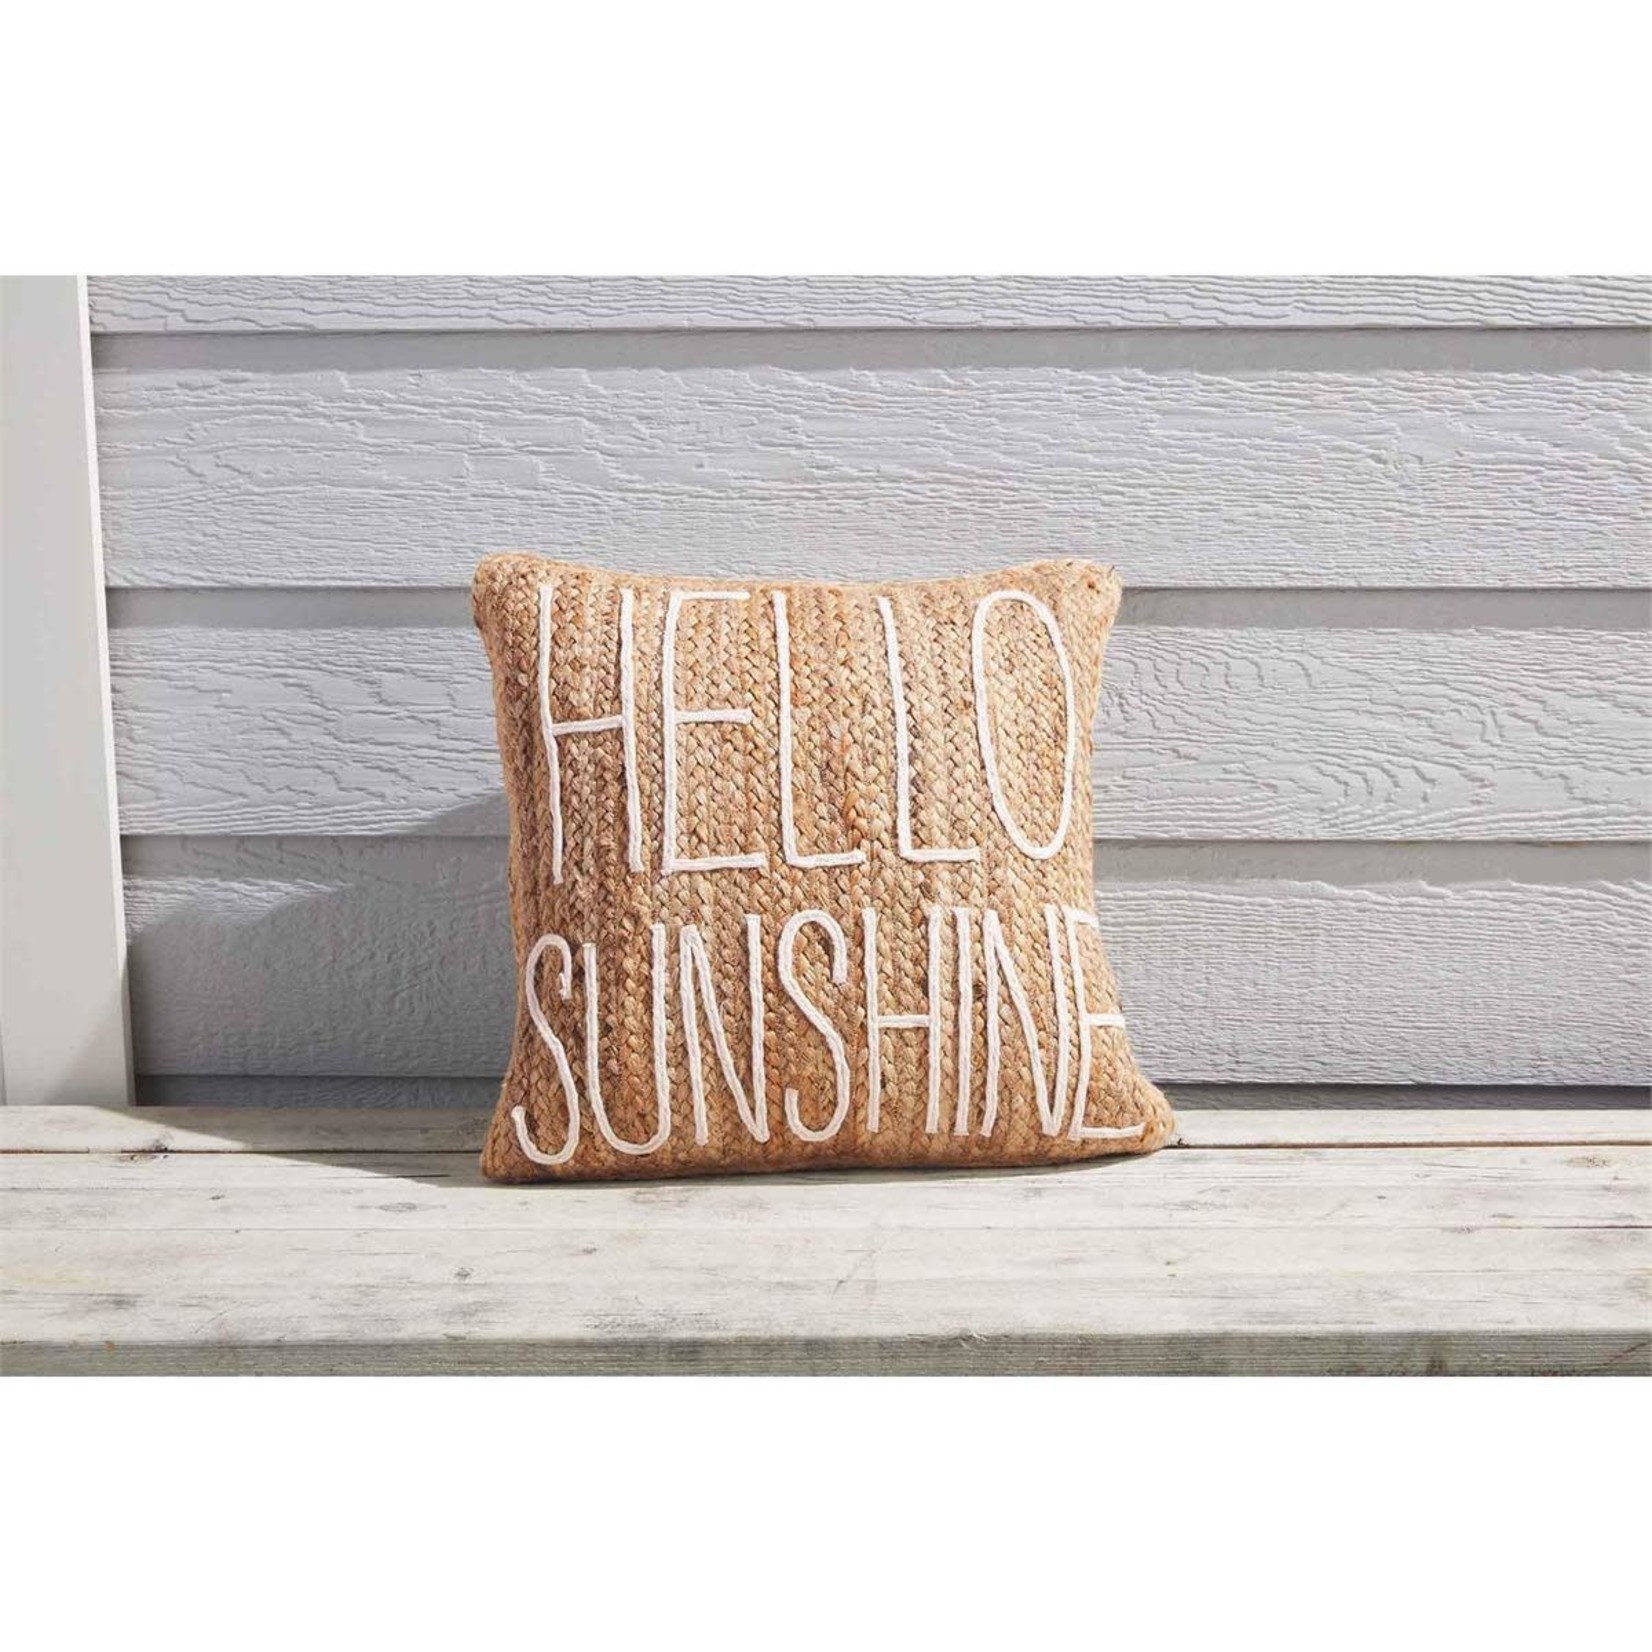 18" Hello Sunshine Jute Porch Pillow